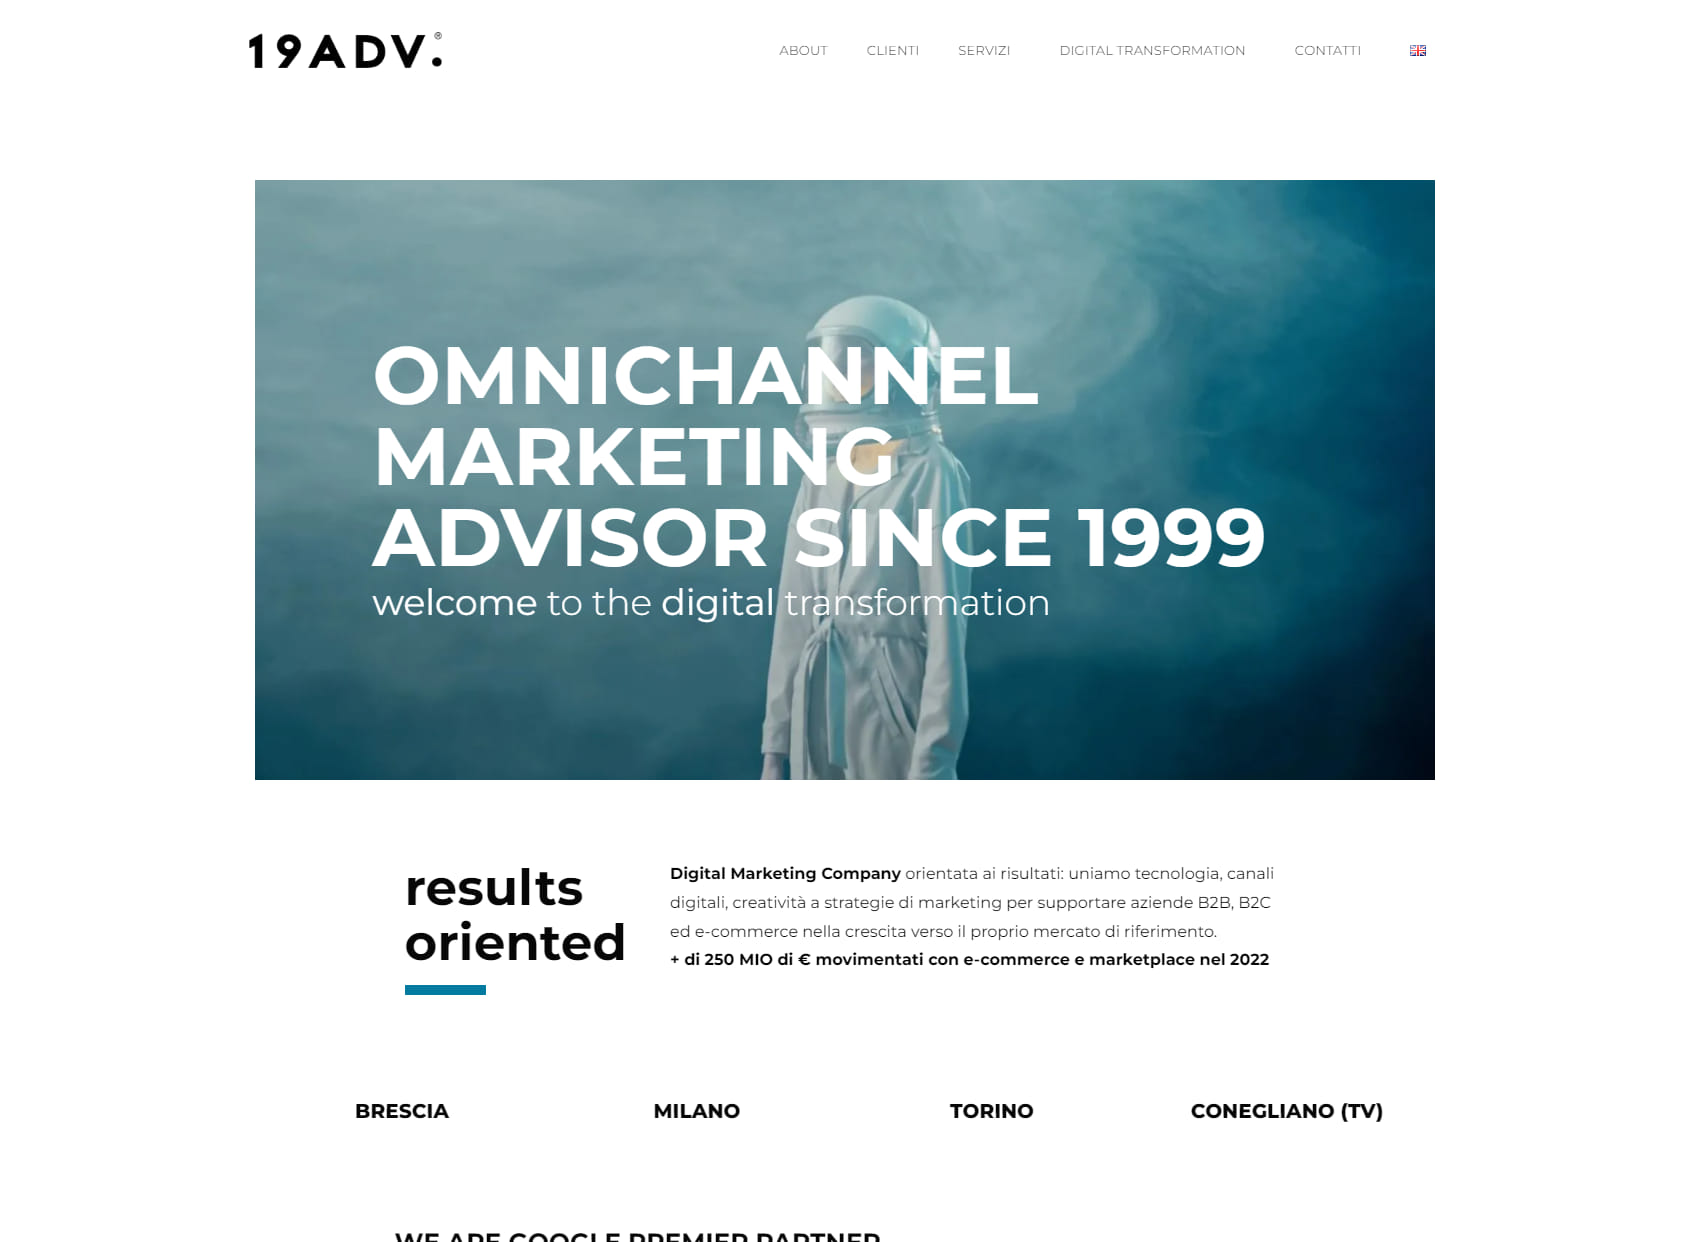 19ADV. Omnichannel Marketing Advisor